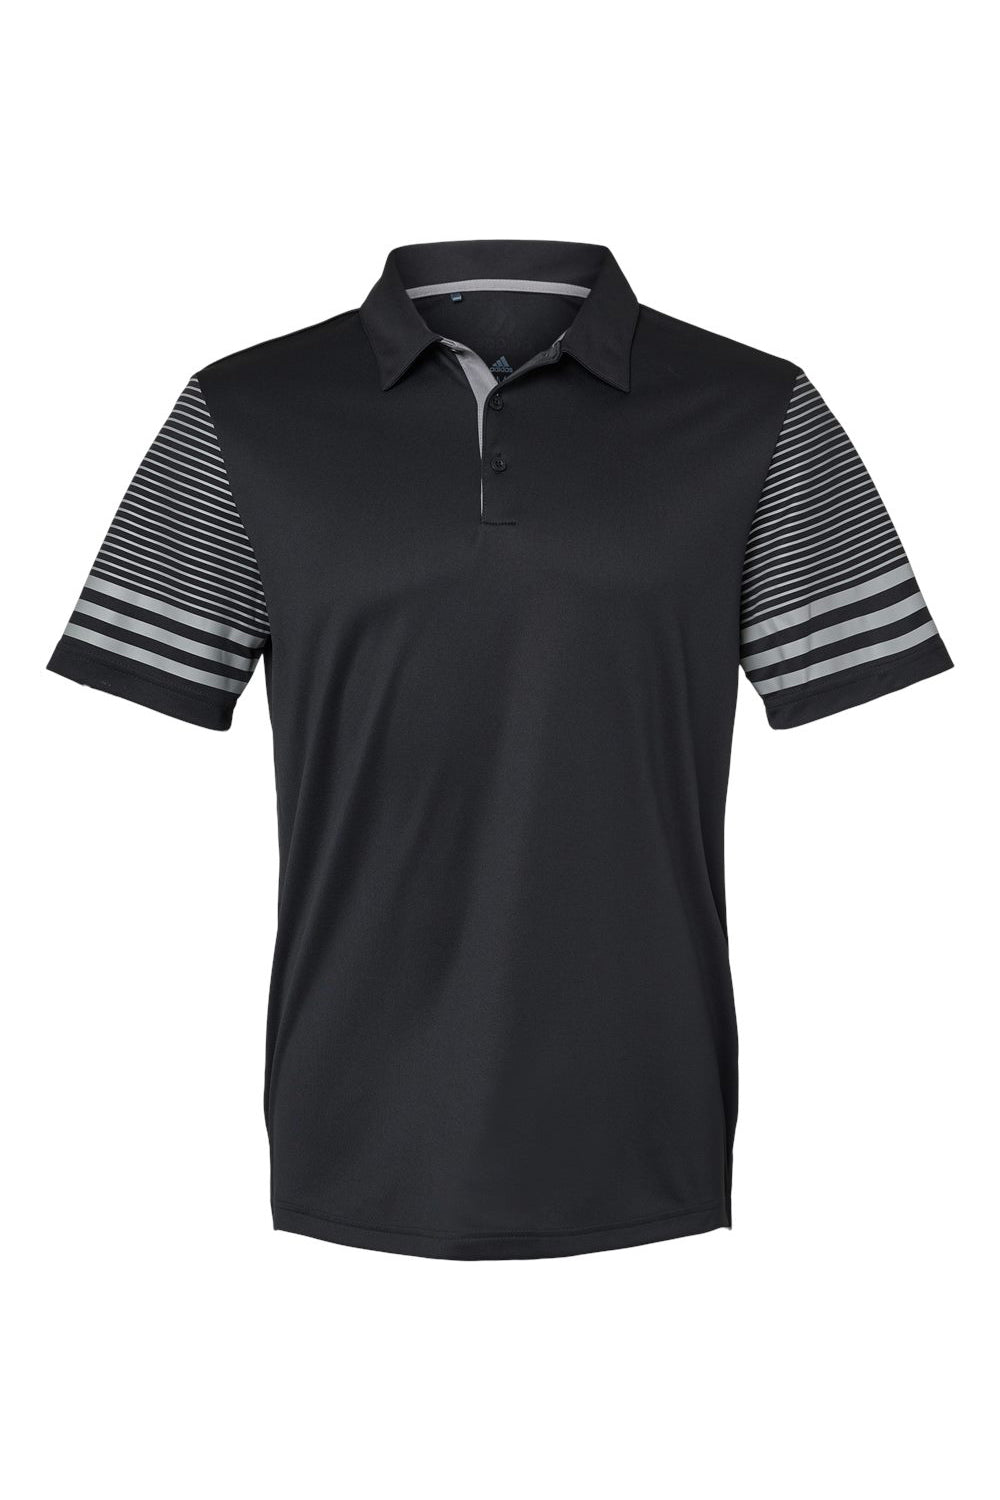 Adidas A490 Mens Striped UPF 50+ Short Sleeve Polo Shirt Black Flat Front